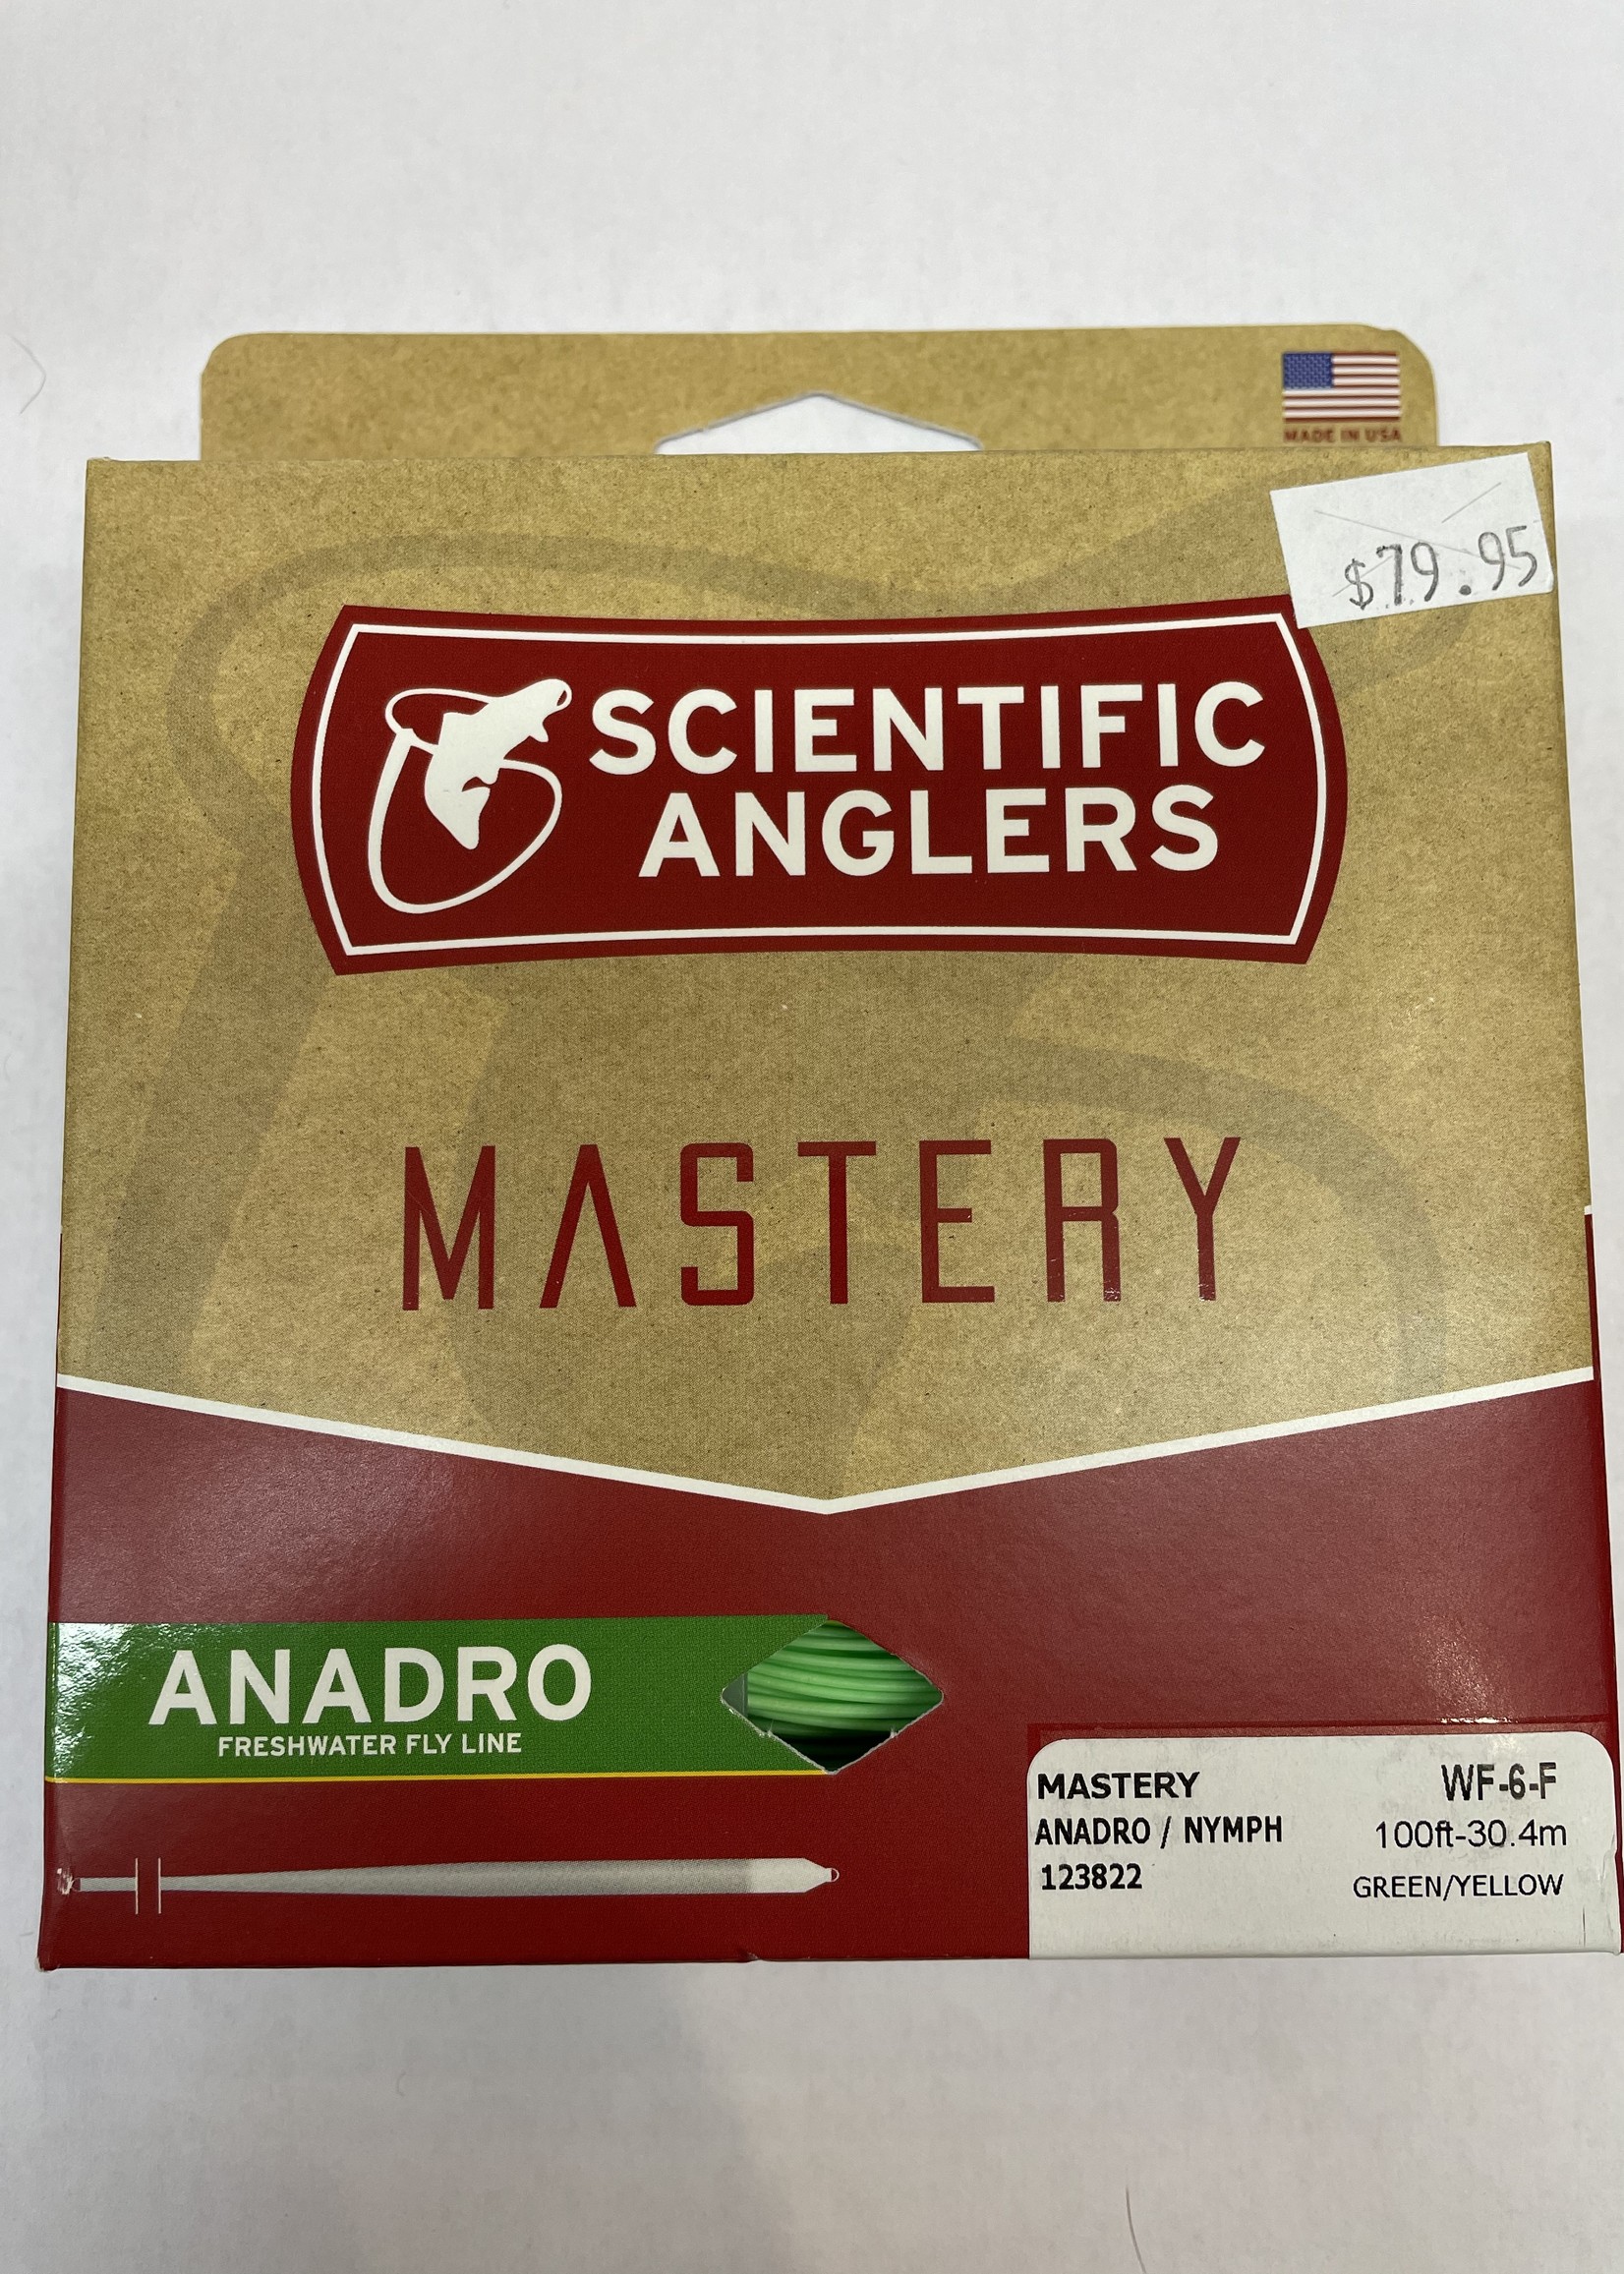 Scientific Anglers Scientific Anglers Mastery Anadro